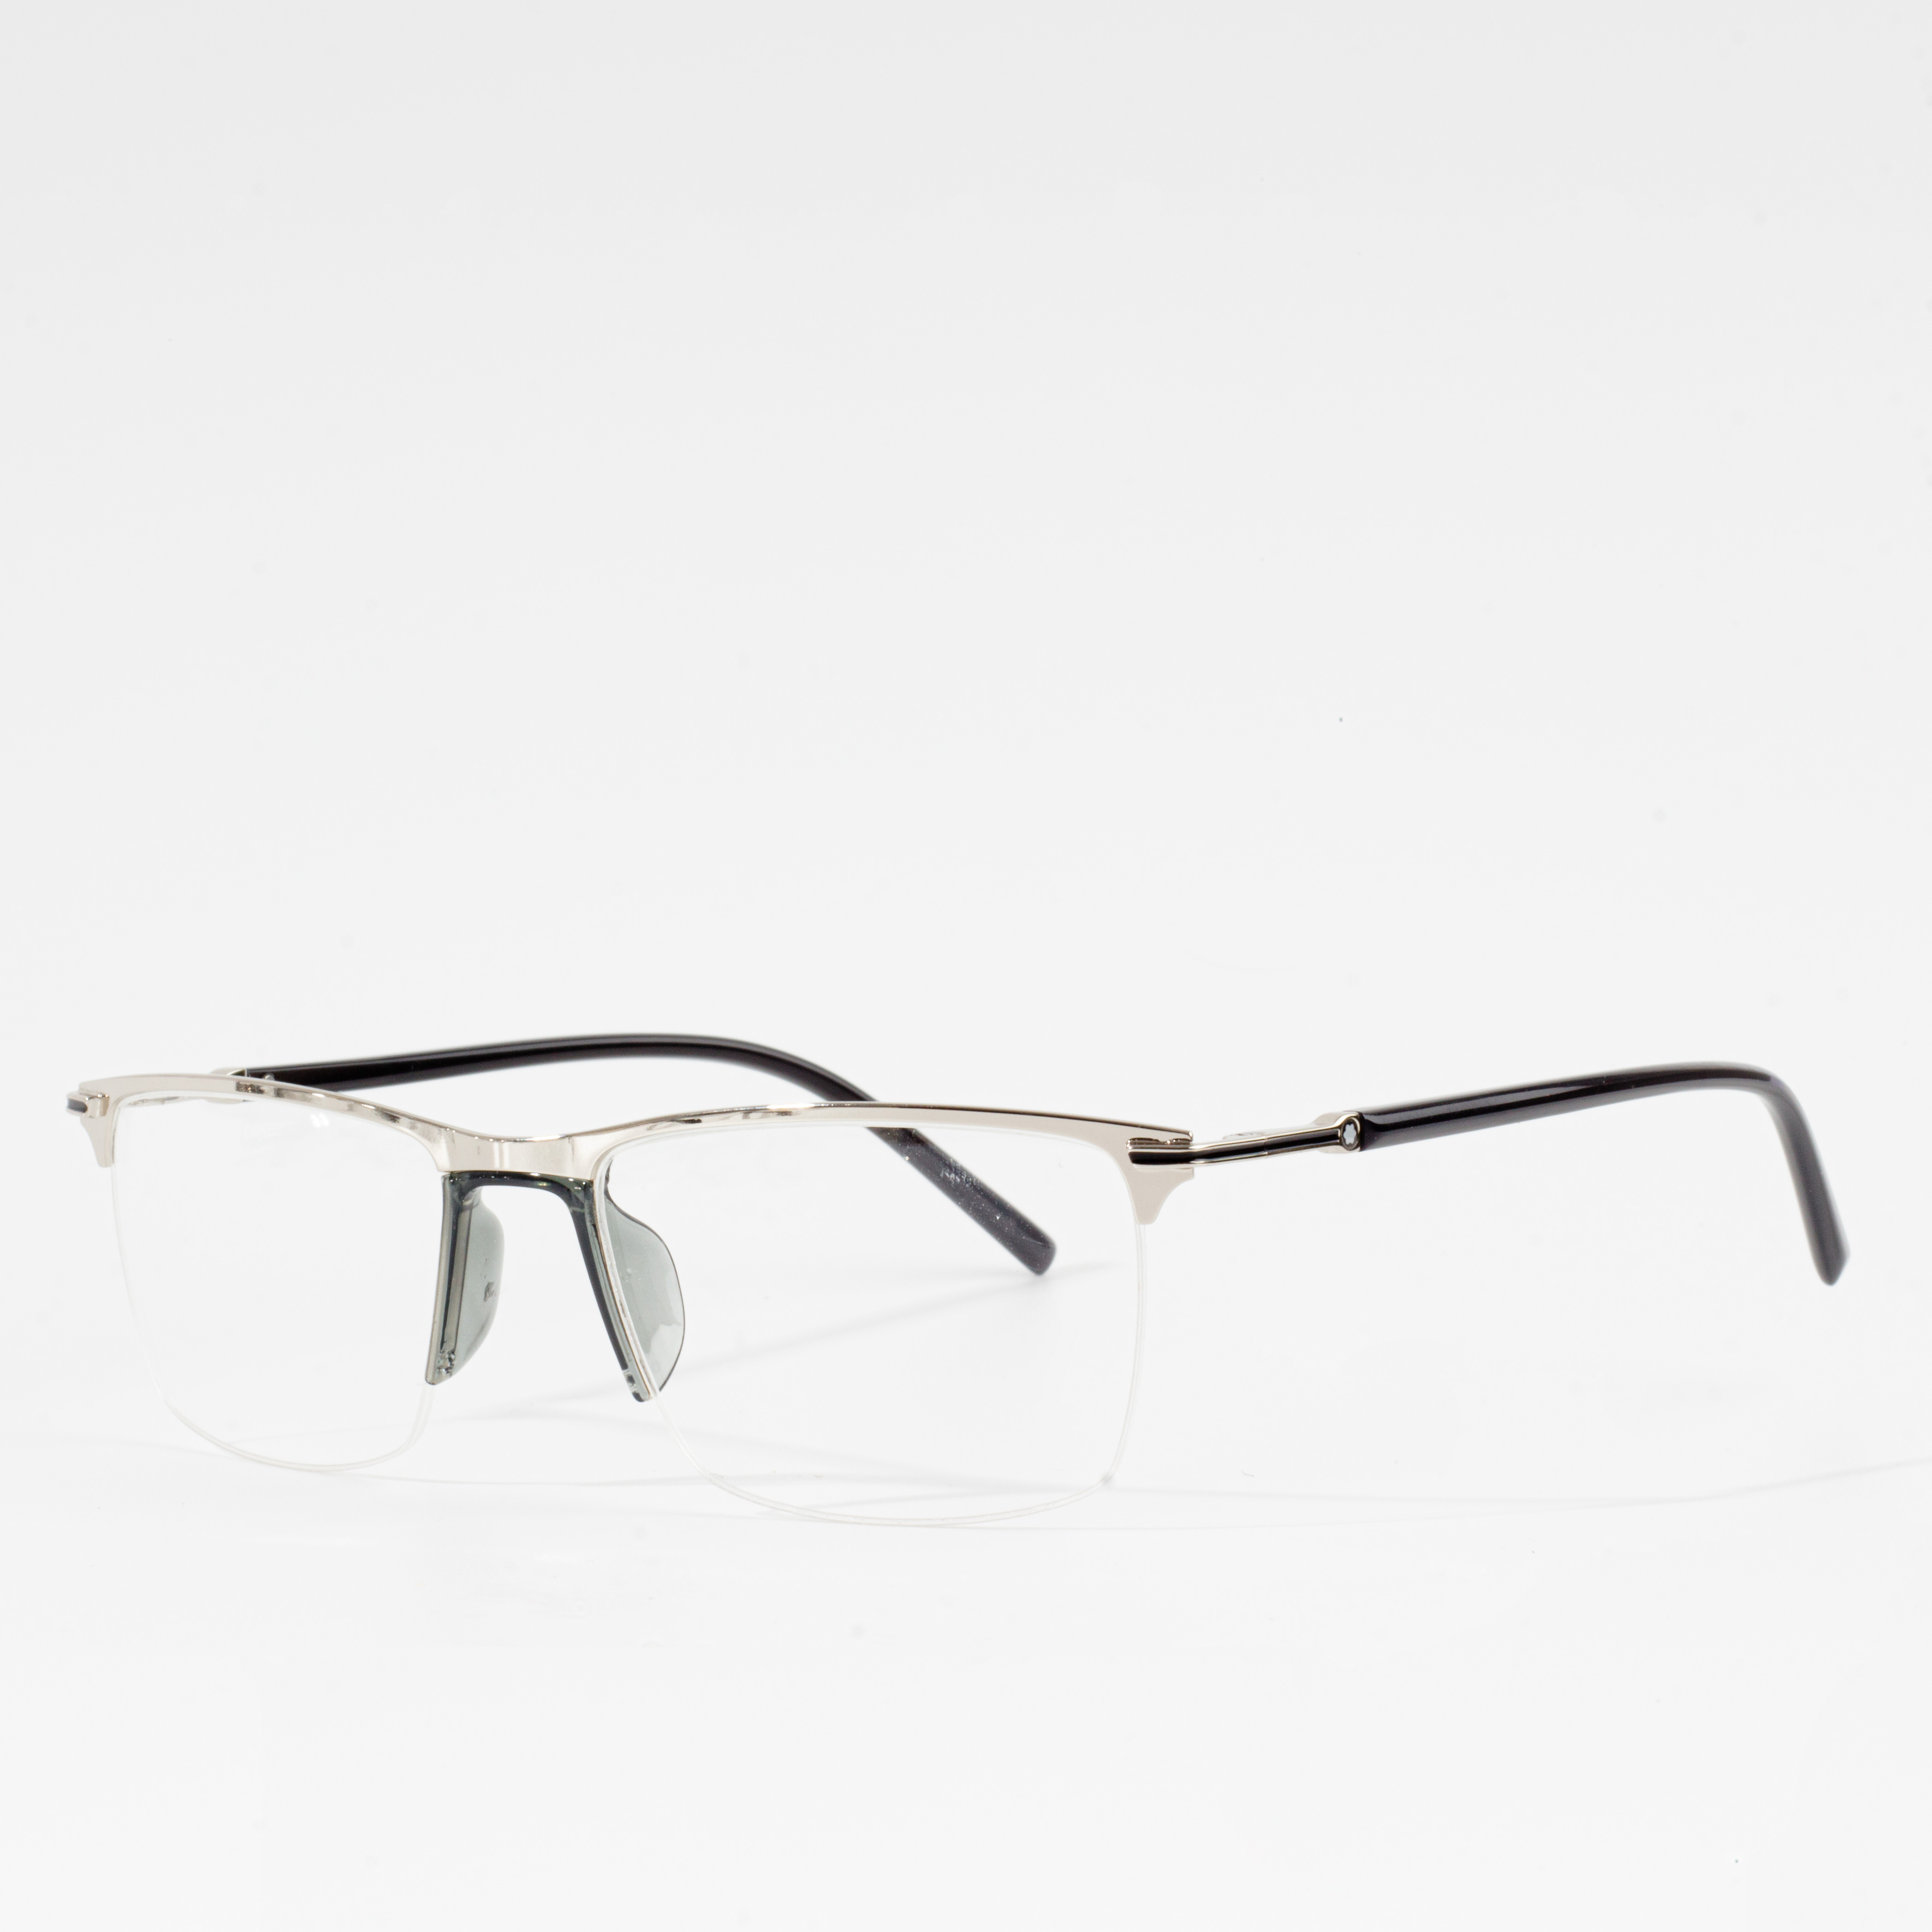 spektakel Optical Eyeglasses Frames